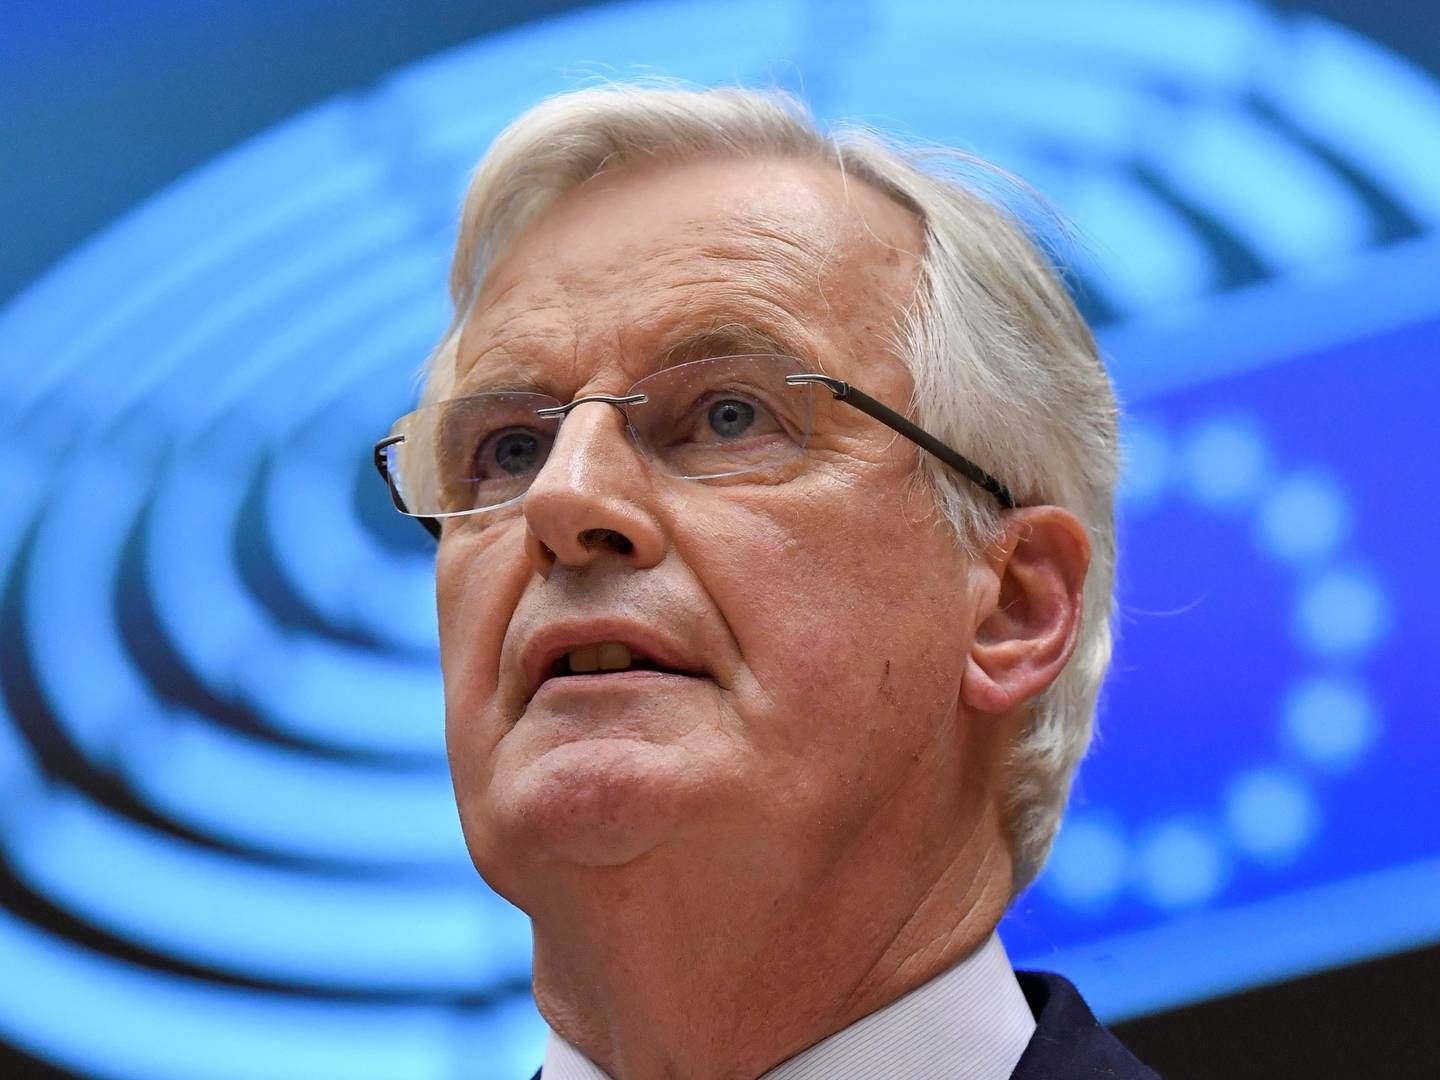 EU's chefforhandler, Michel Barnier. | Foto: JOHN THYS/AFP / AFP